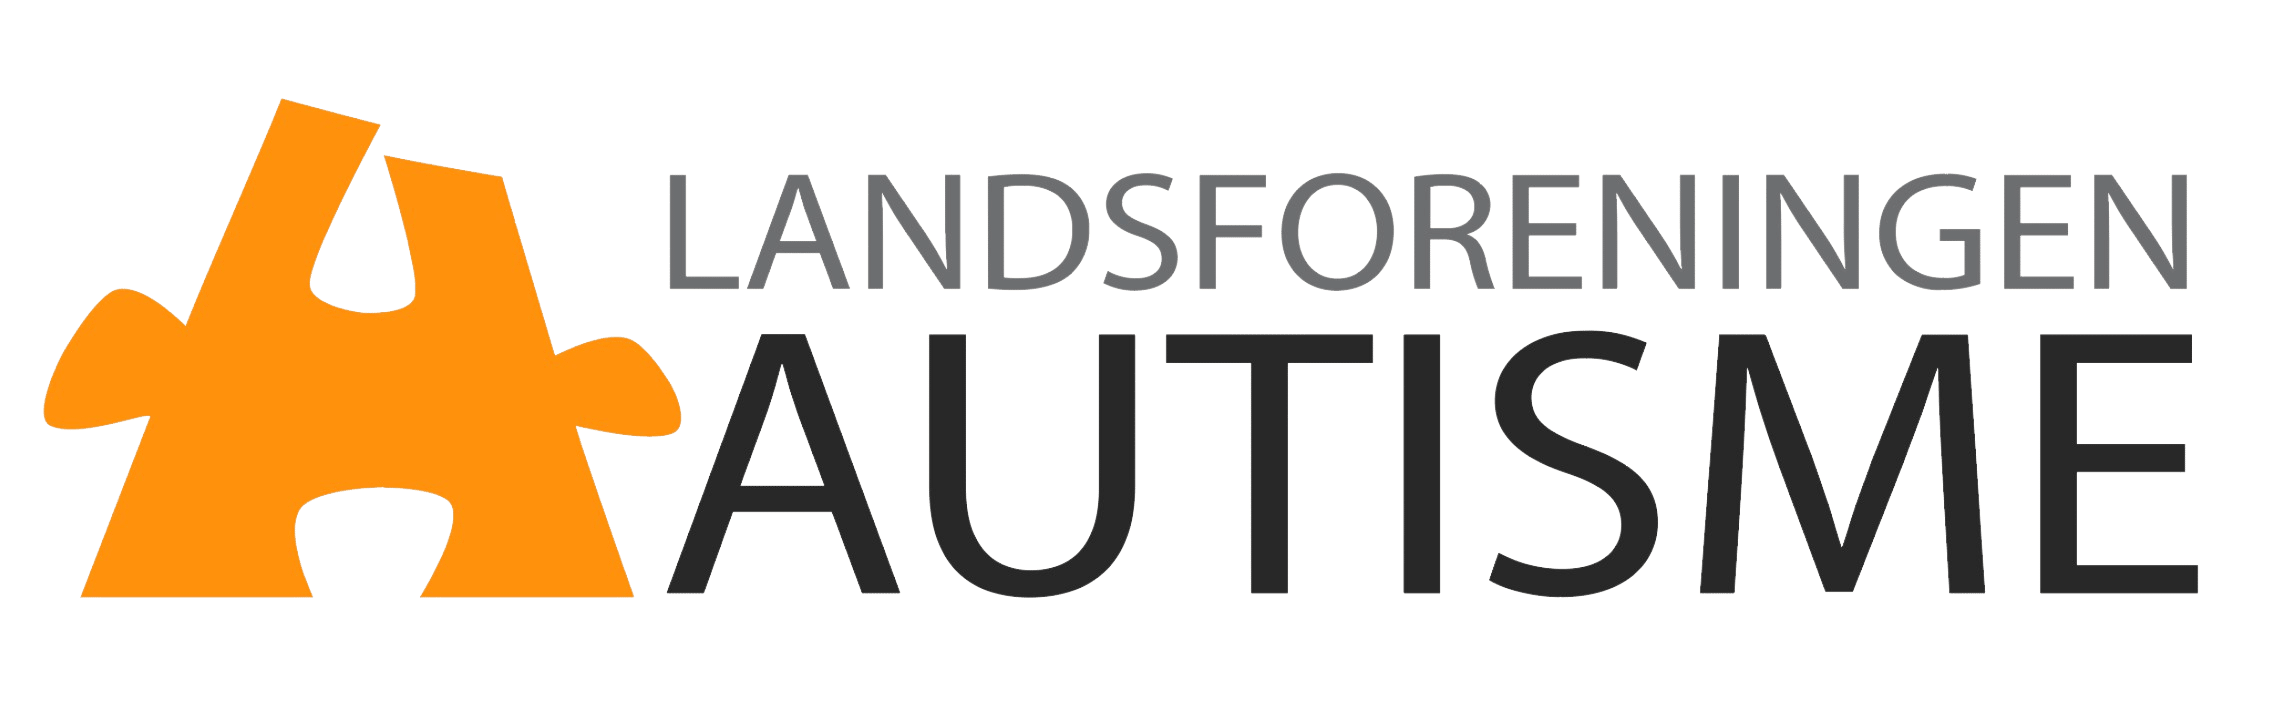 Landsforeningen autisme autisme bladet logo